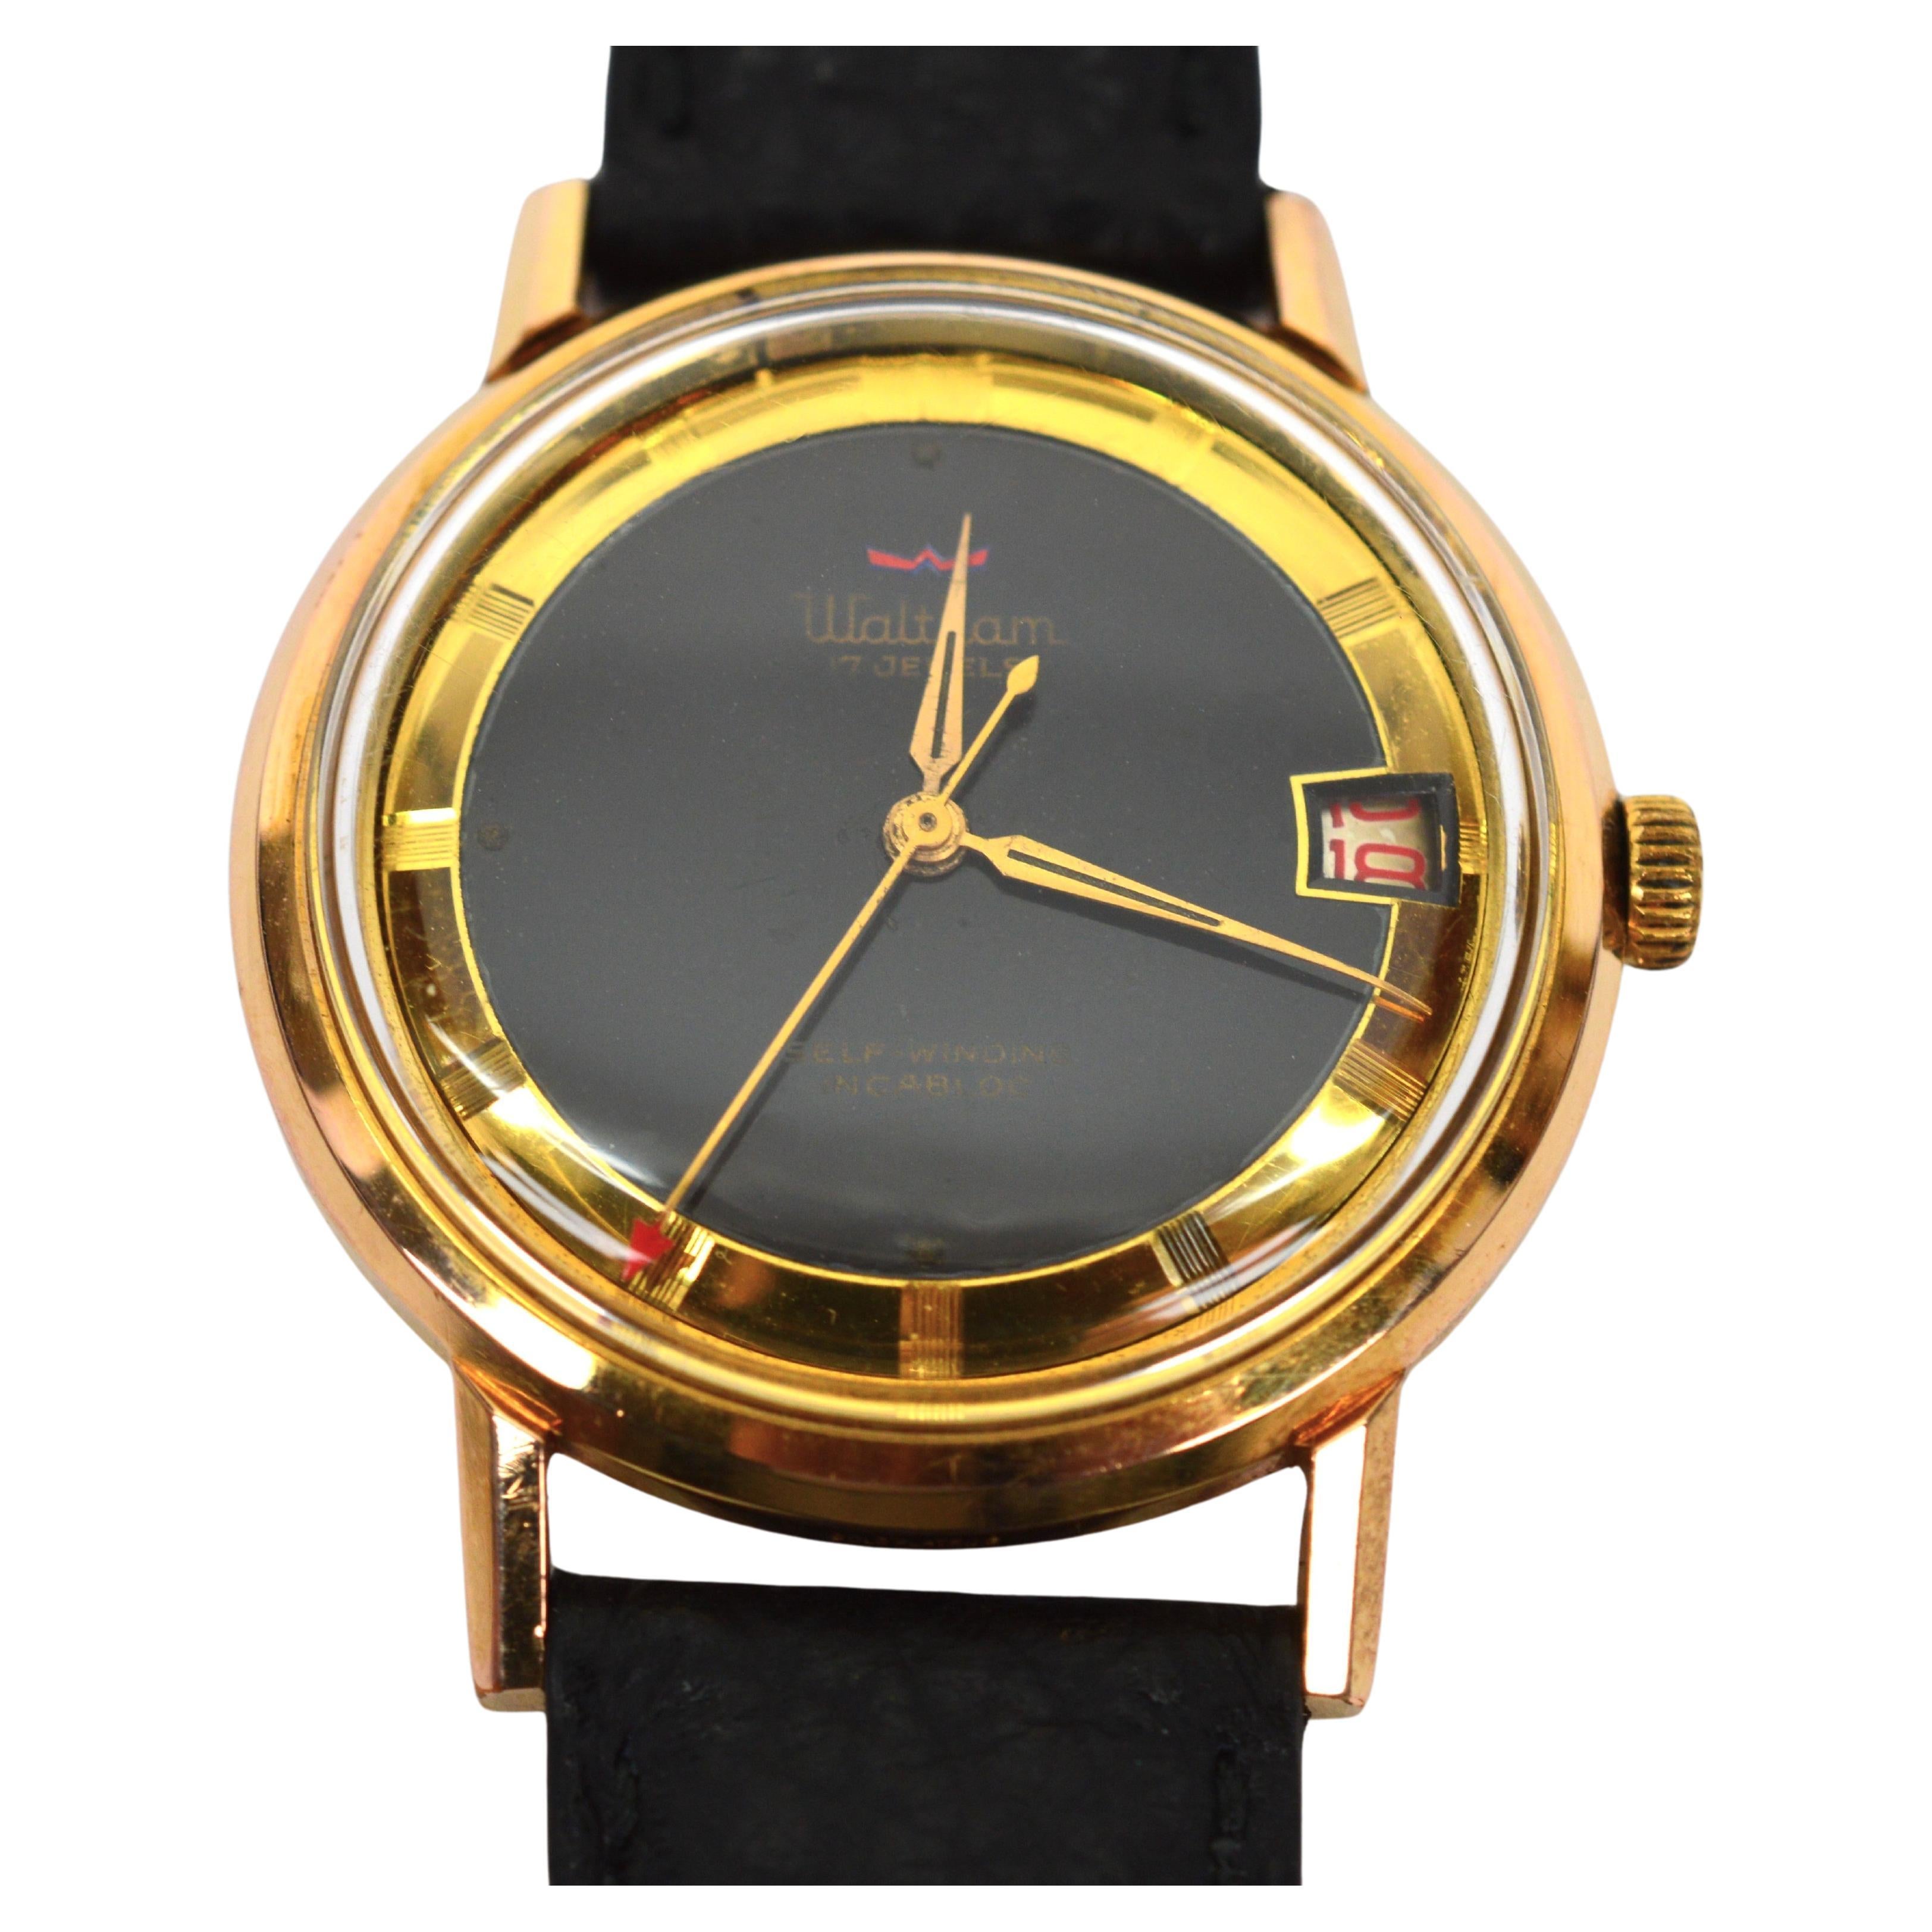 Waltham Fontomatic Men's Wrist Watch w Date For Sale